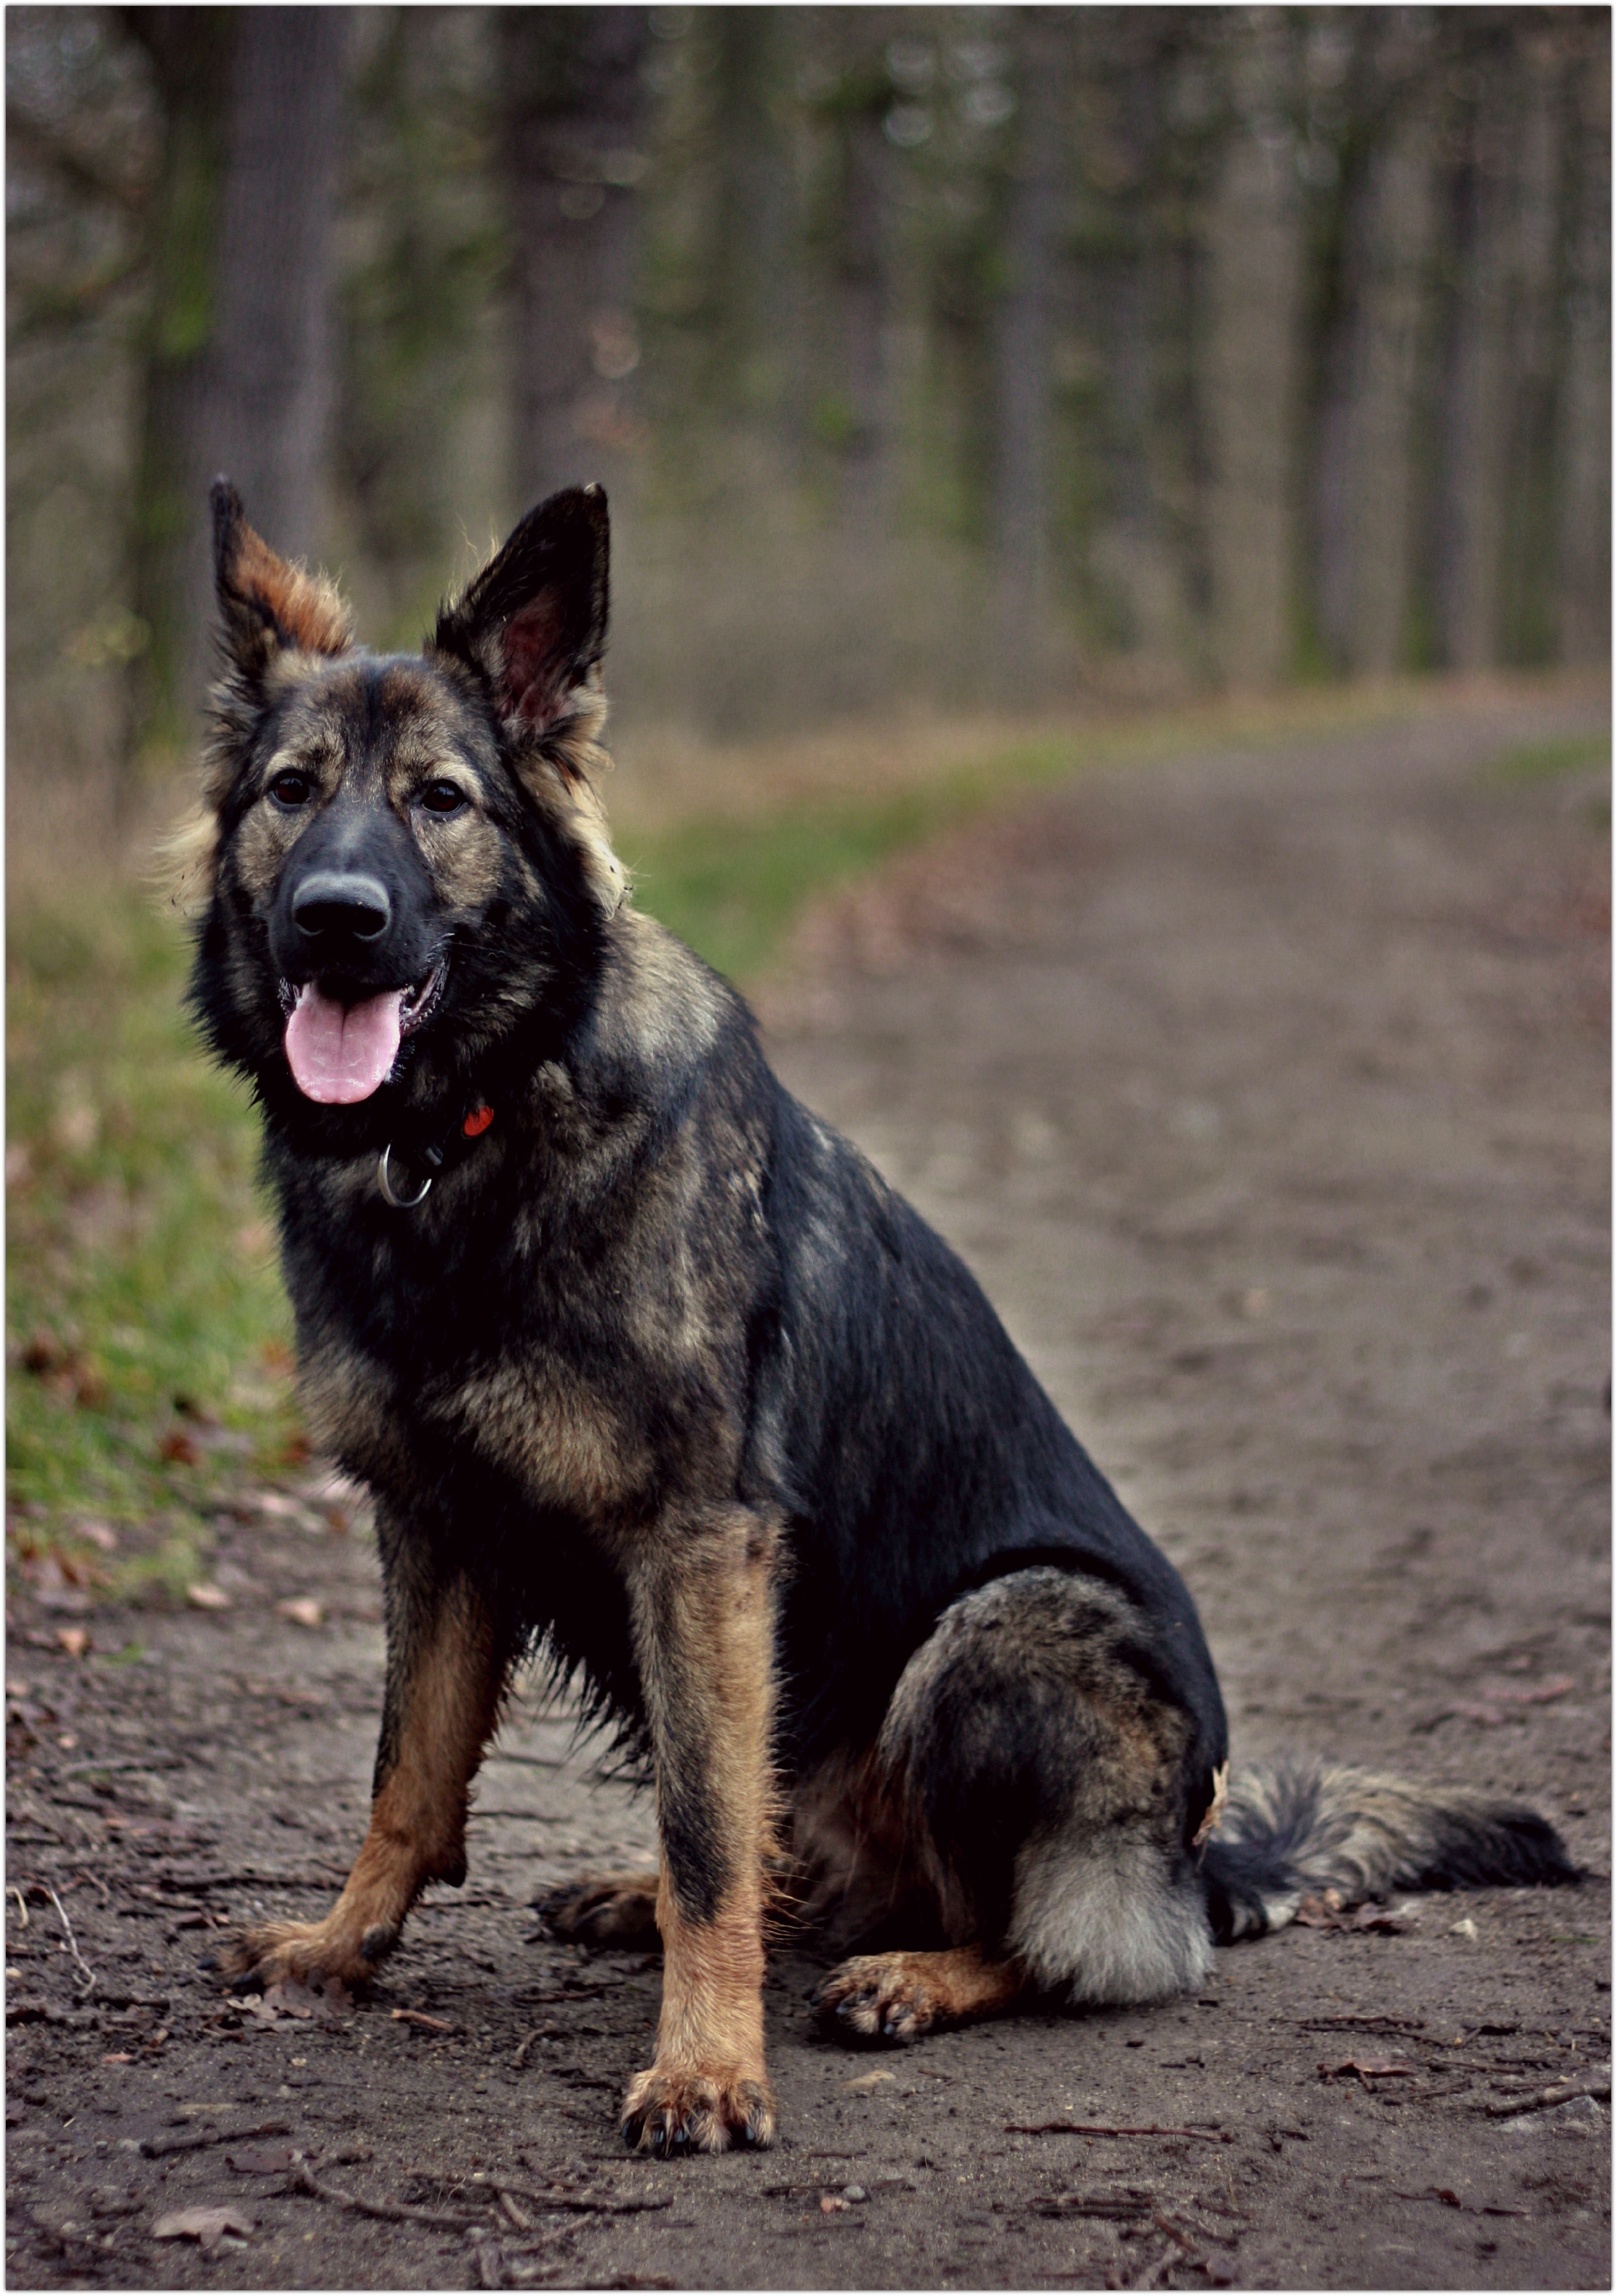 German Shepherd, Dog, Forest, Sitting, dog, one animal